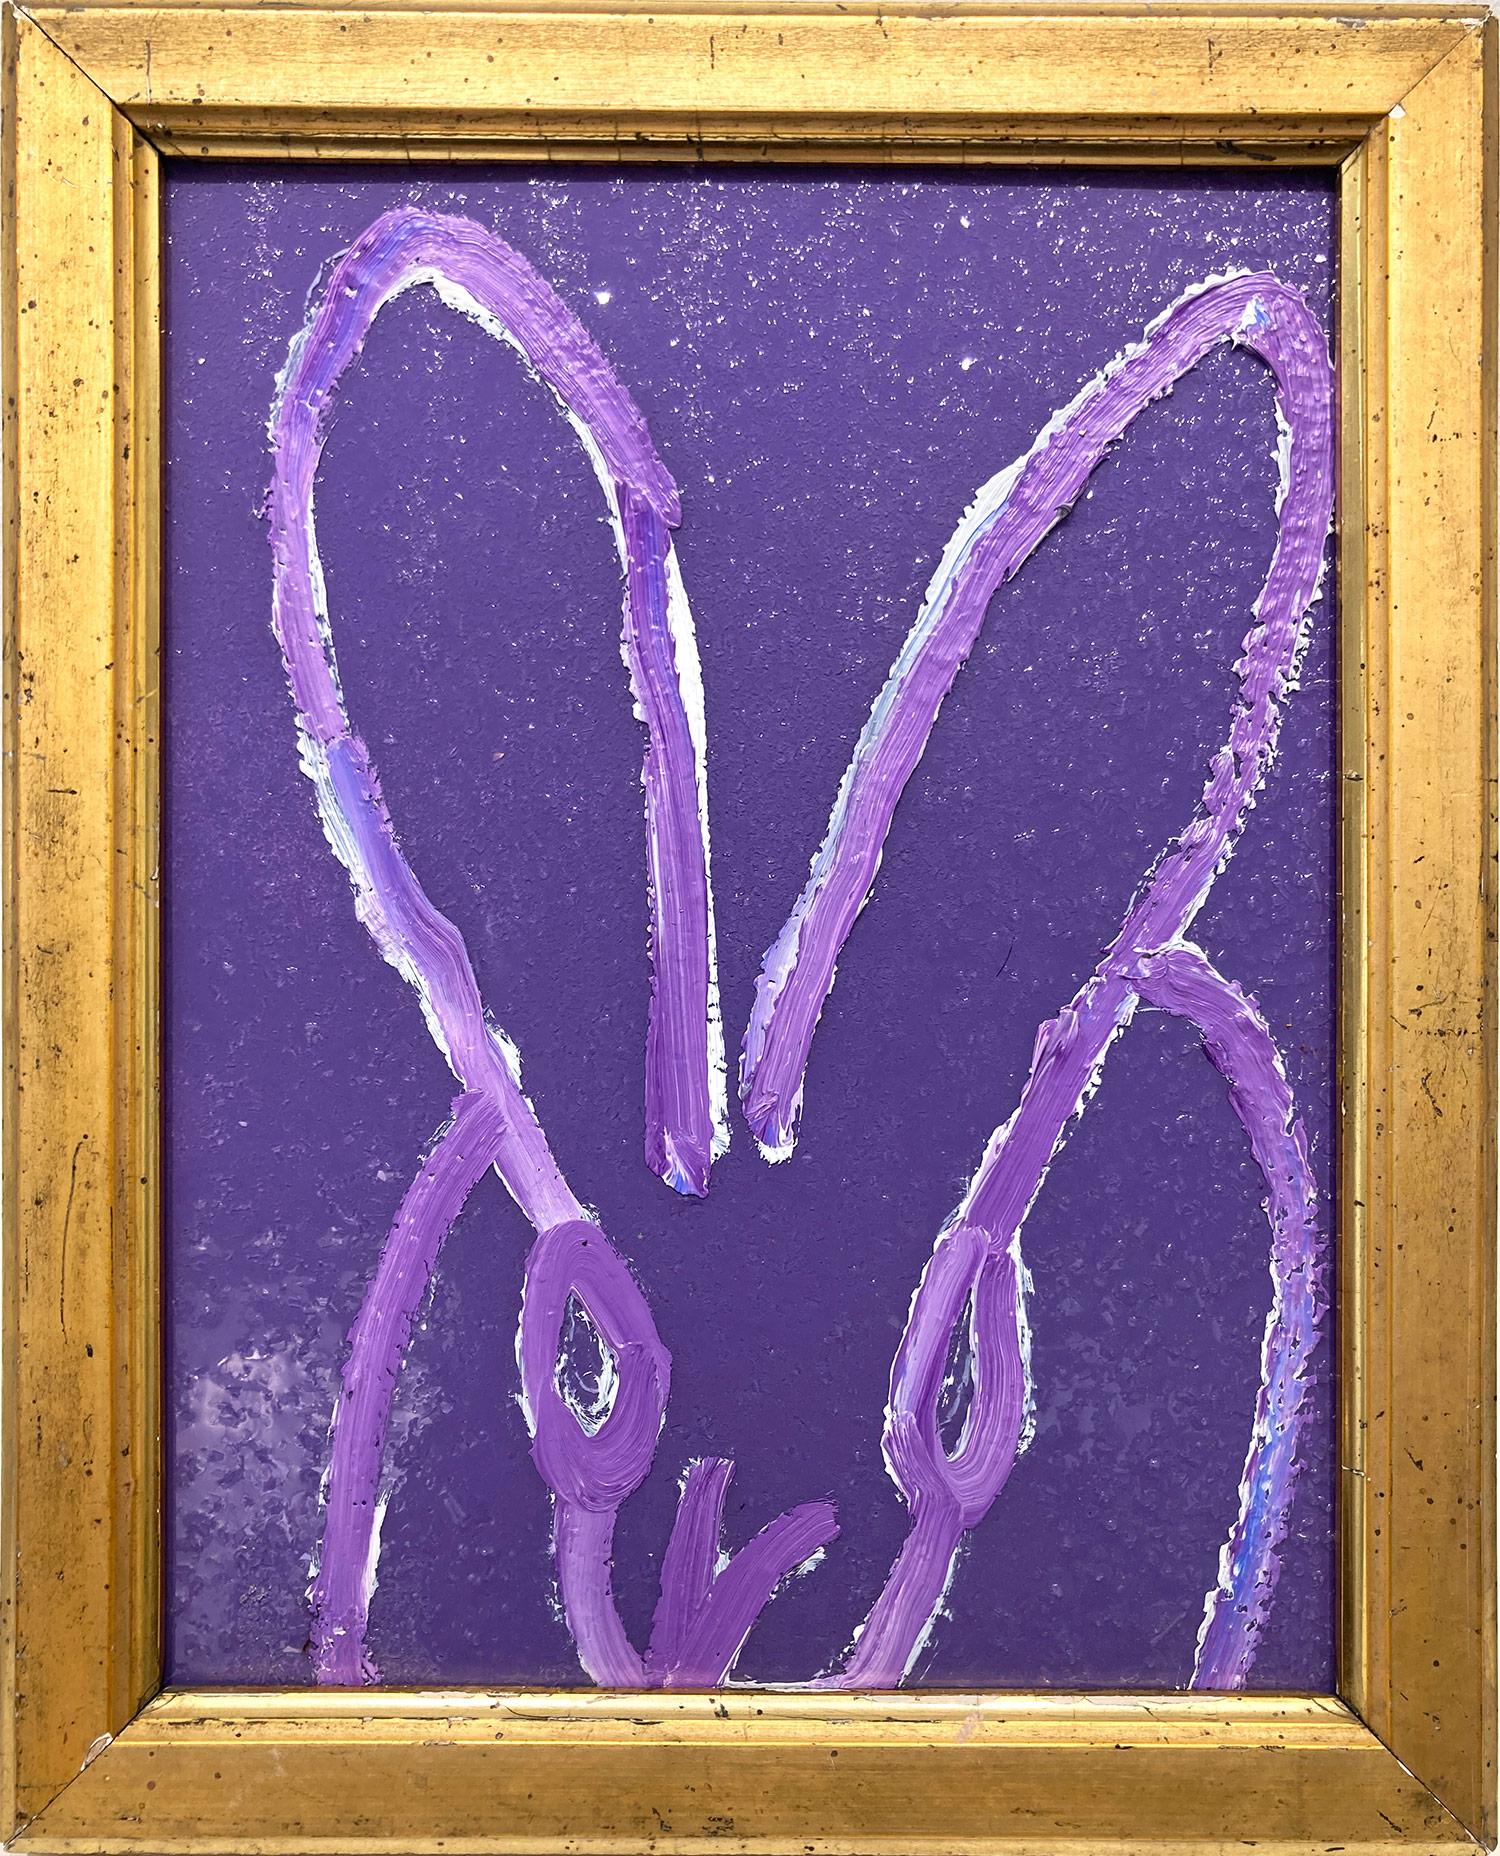 Hunt Slonem Abstract Painting - "Lavendar" Black Bunny on Lavender Purple Background Oil Painting on Wood Panel